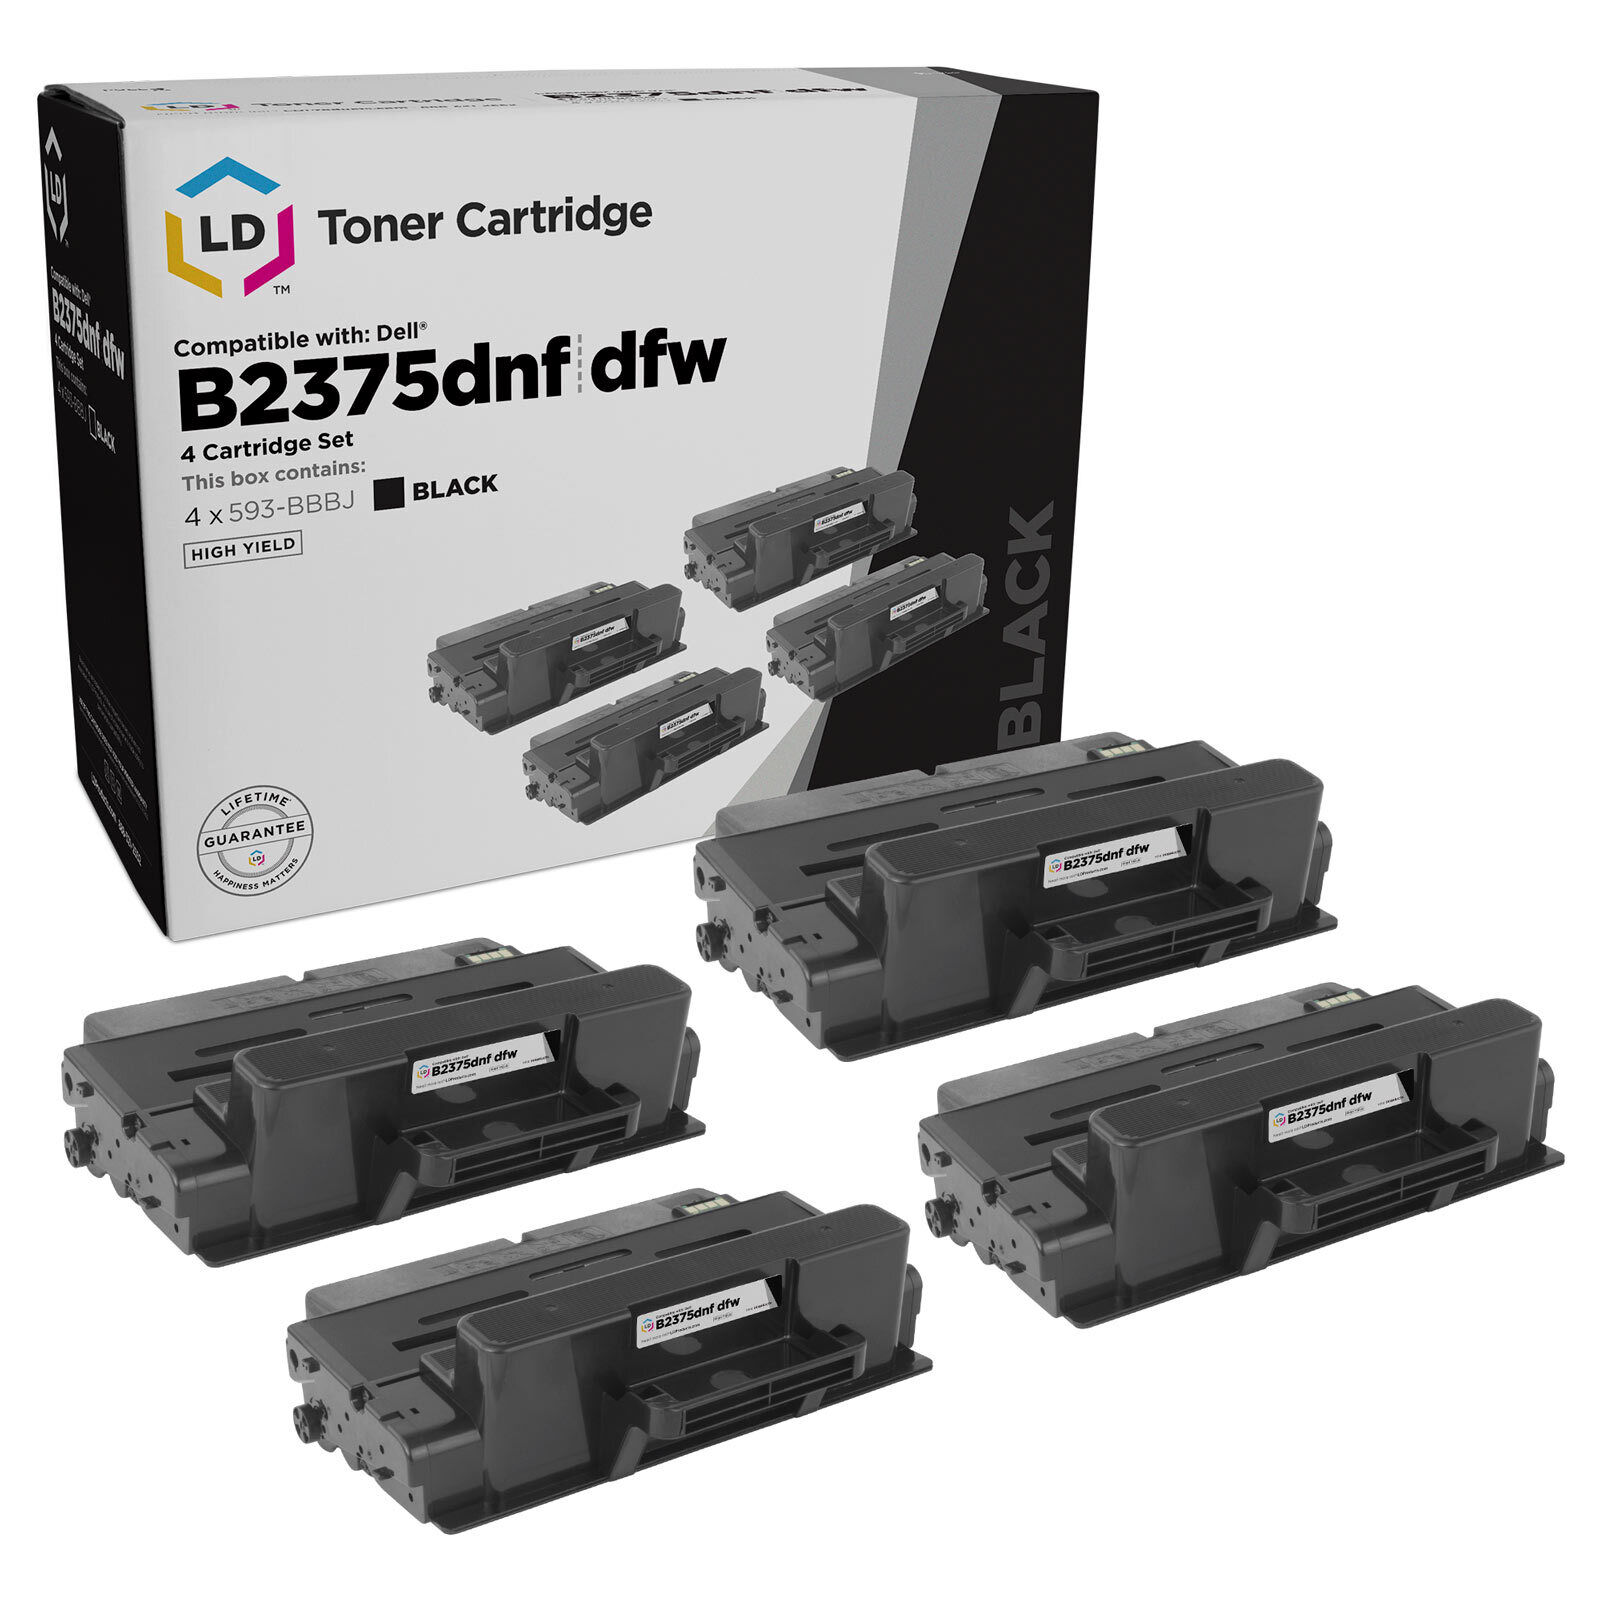 LD Compatible Dell 593-BBBJ 4PK Black Toner Cartridges for B2375dfw/B2375dnf